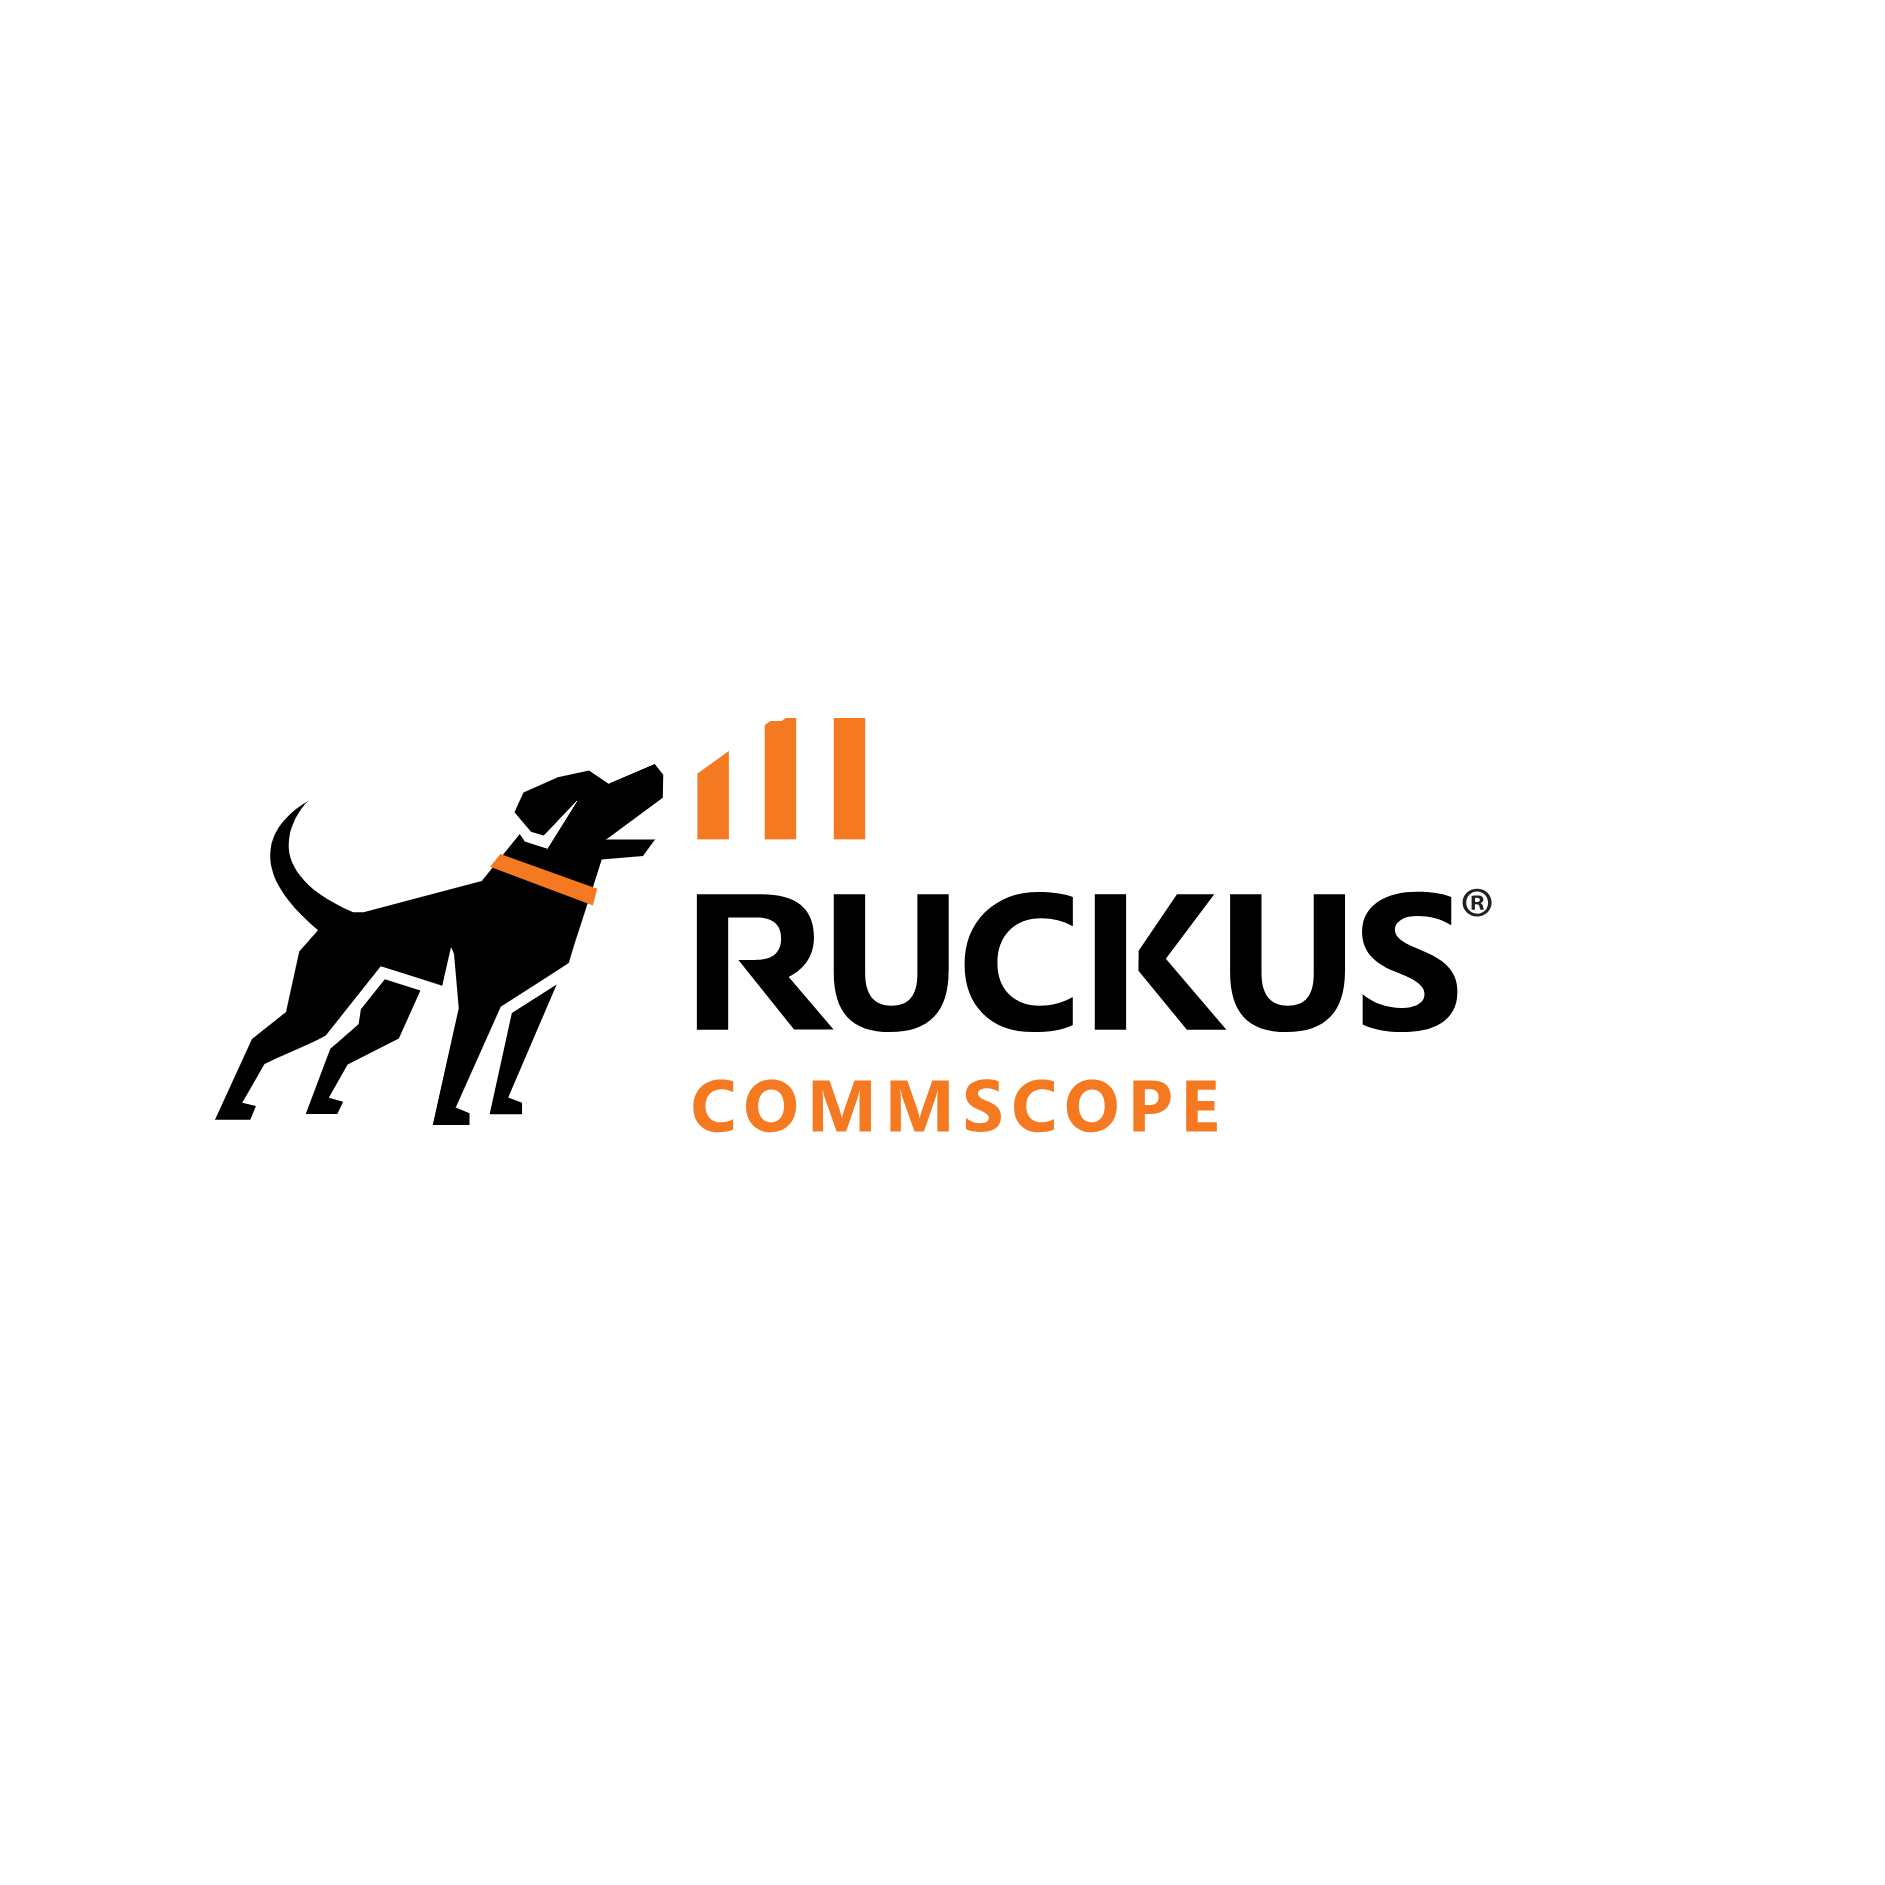 RUCKUS Networks